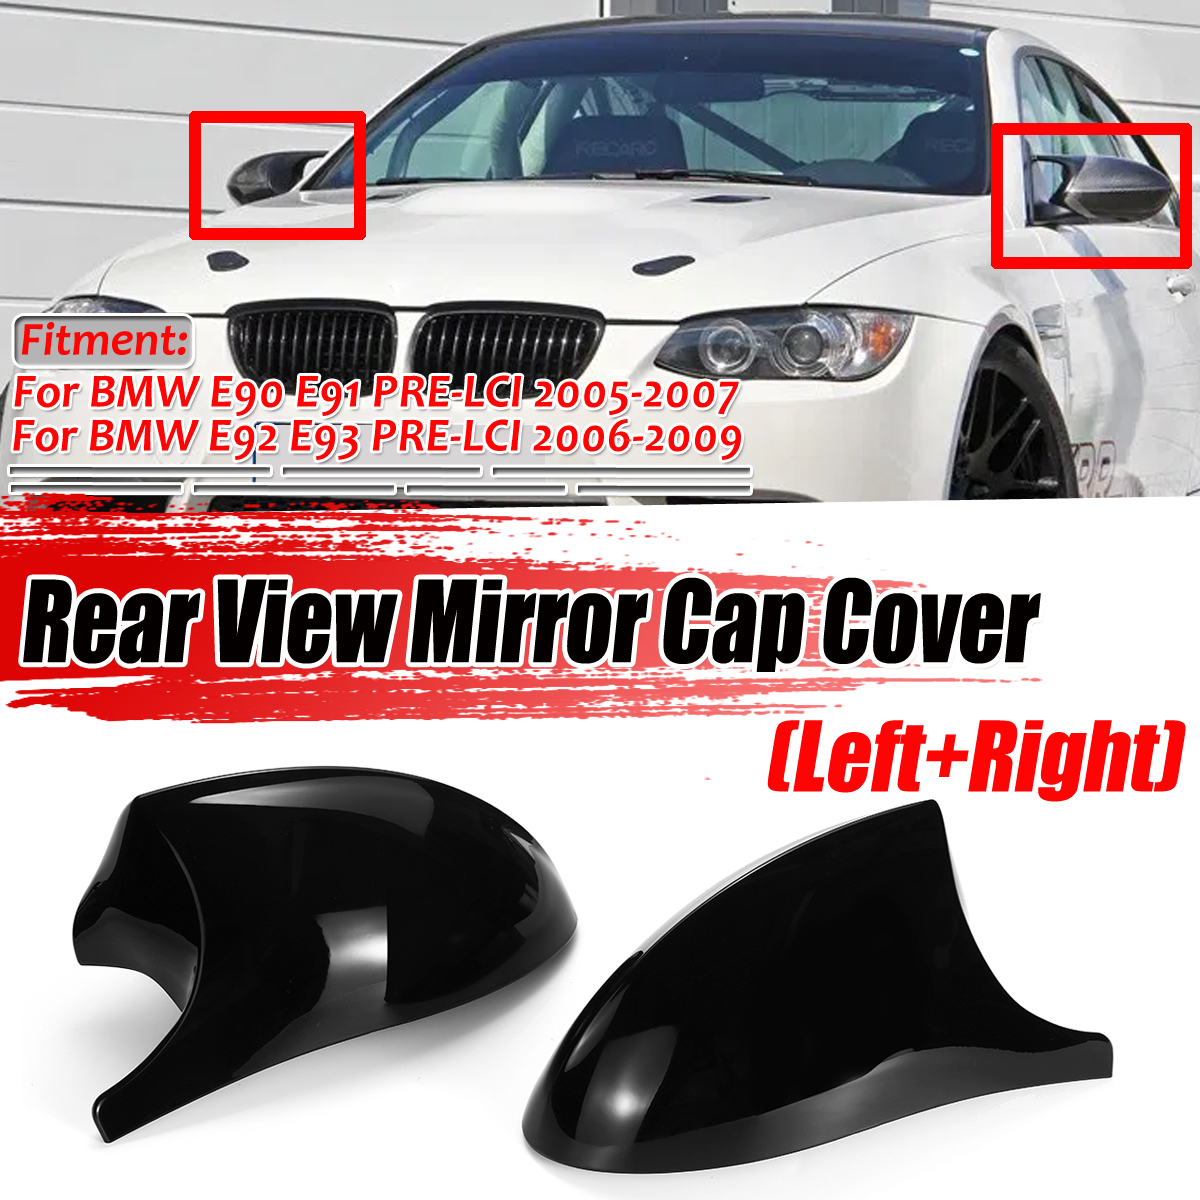 Car Rear View Mirror Cap Cover Replacement Glossy Black Left & Right for BMW E90 E91 2005-2007 E92 E93 2006-2009 M3 Style